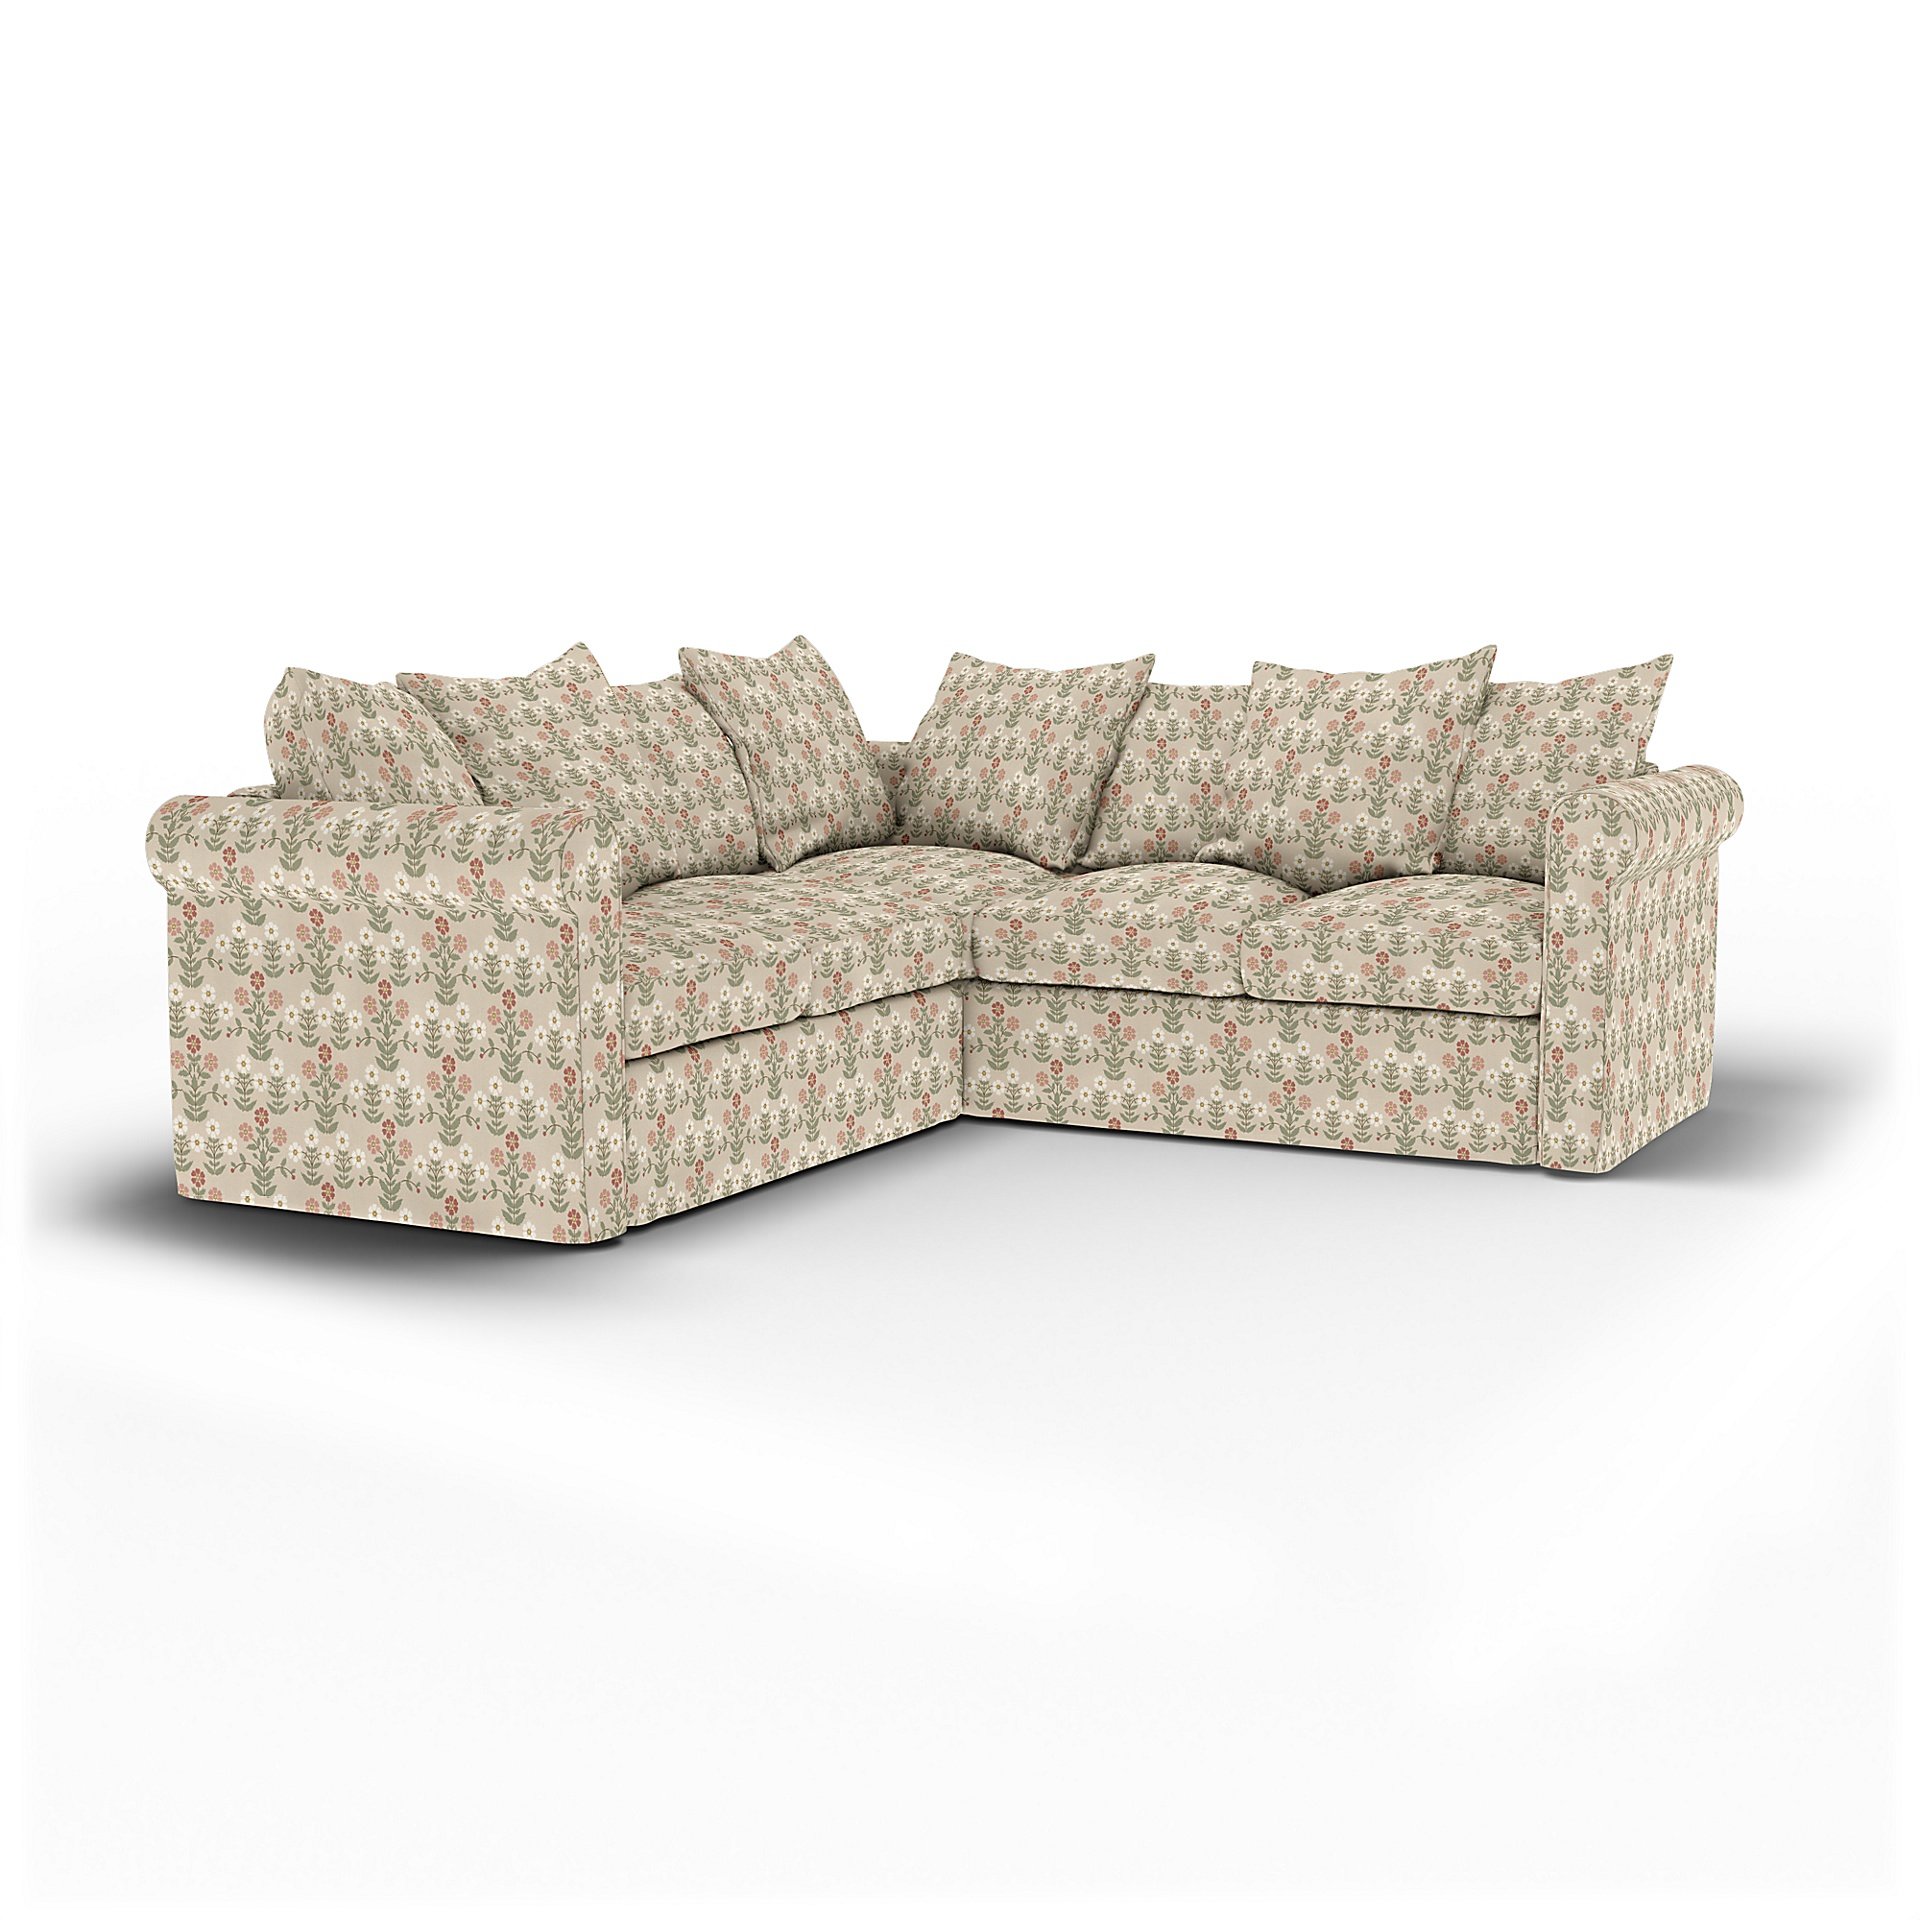 IKEA - Gronlid 4 Seater Corner Sofa Cover, Pink Sippor, BEMZ x BORASTAPETER COLLECTION - Bemz